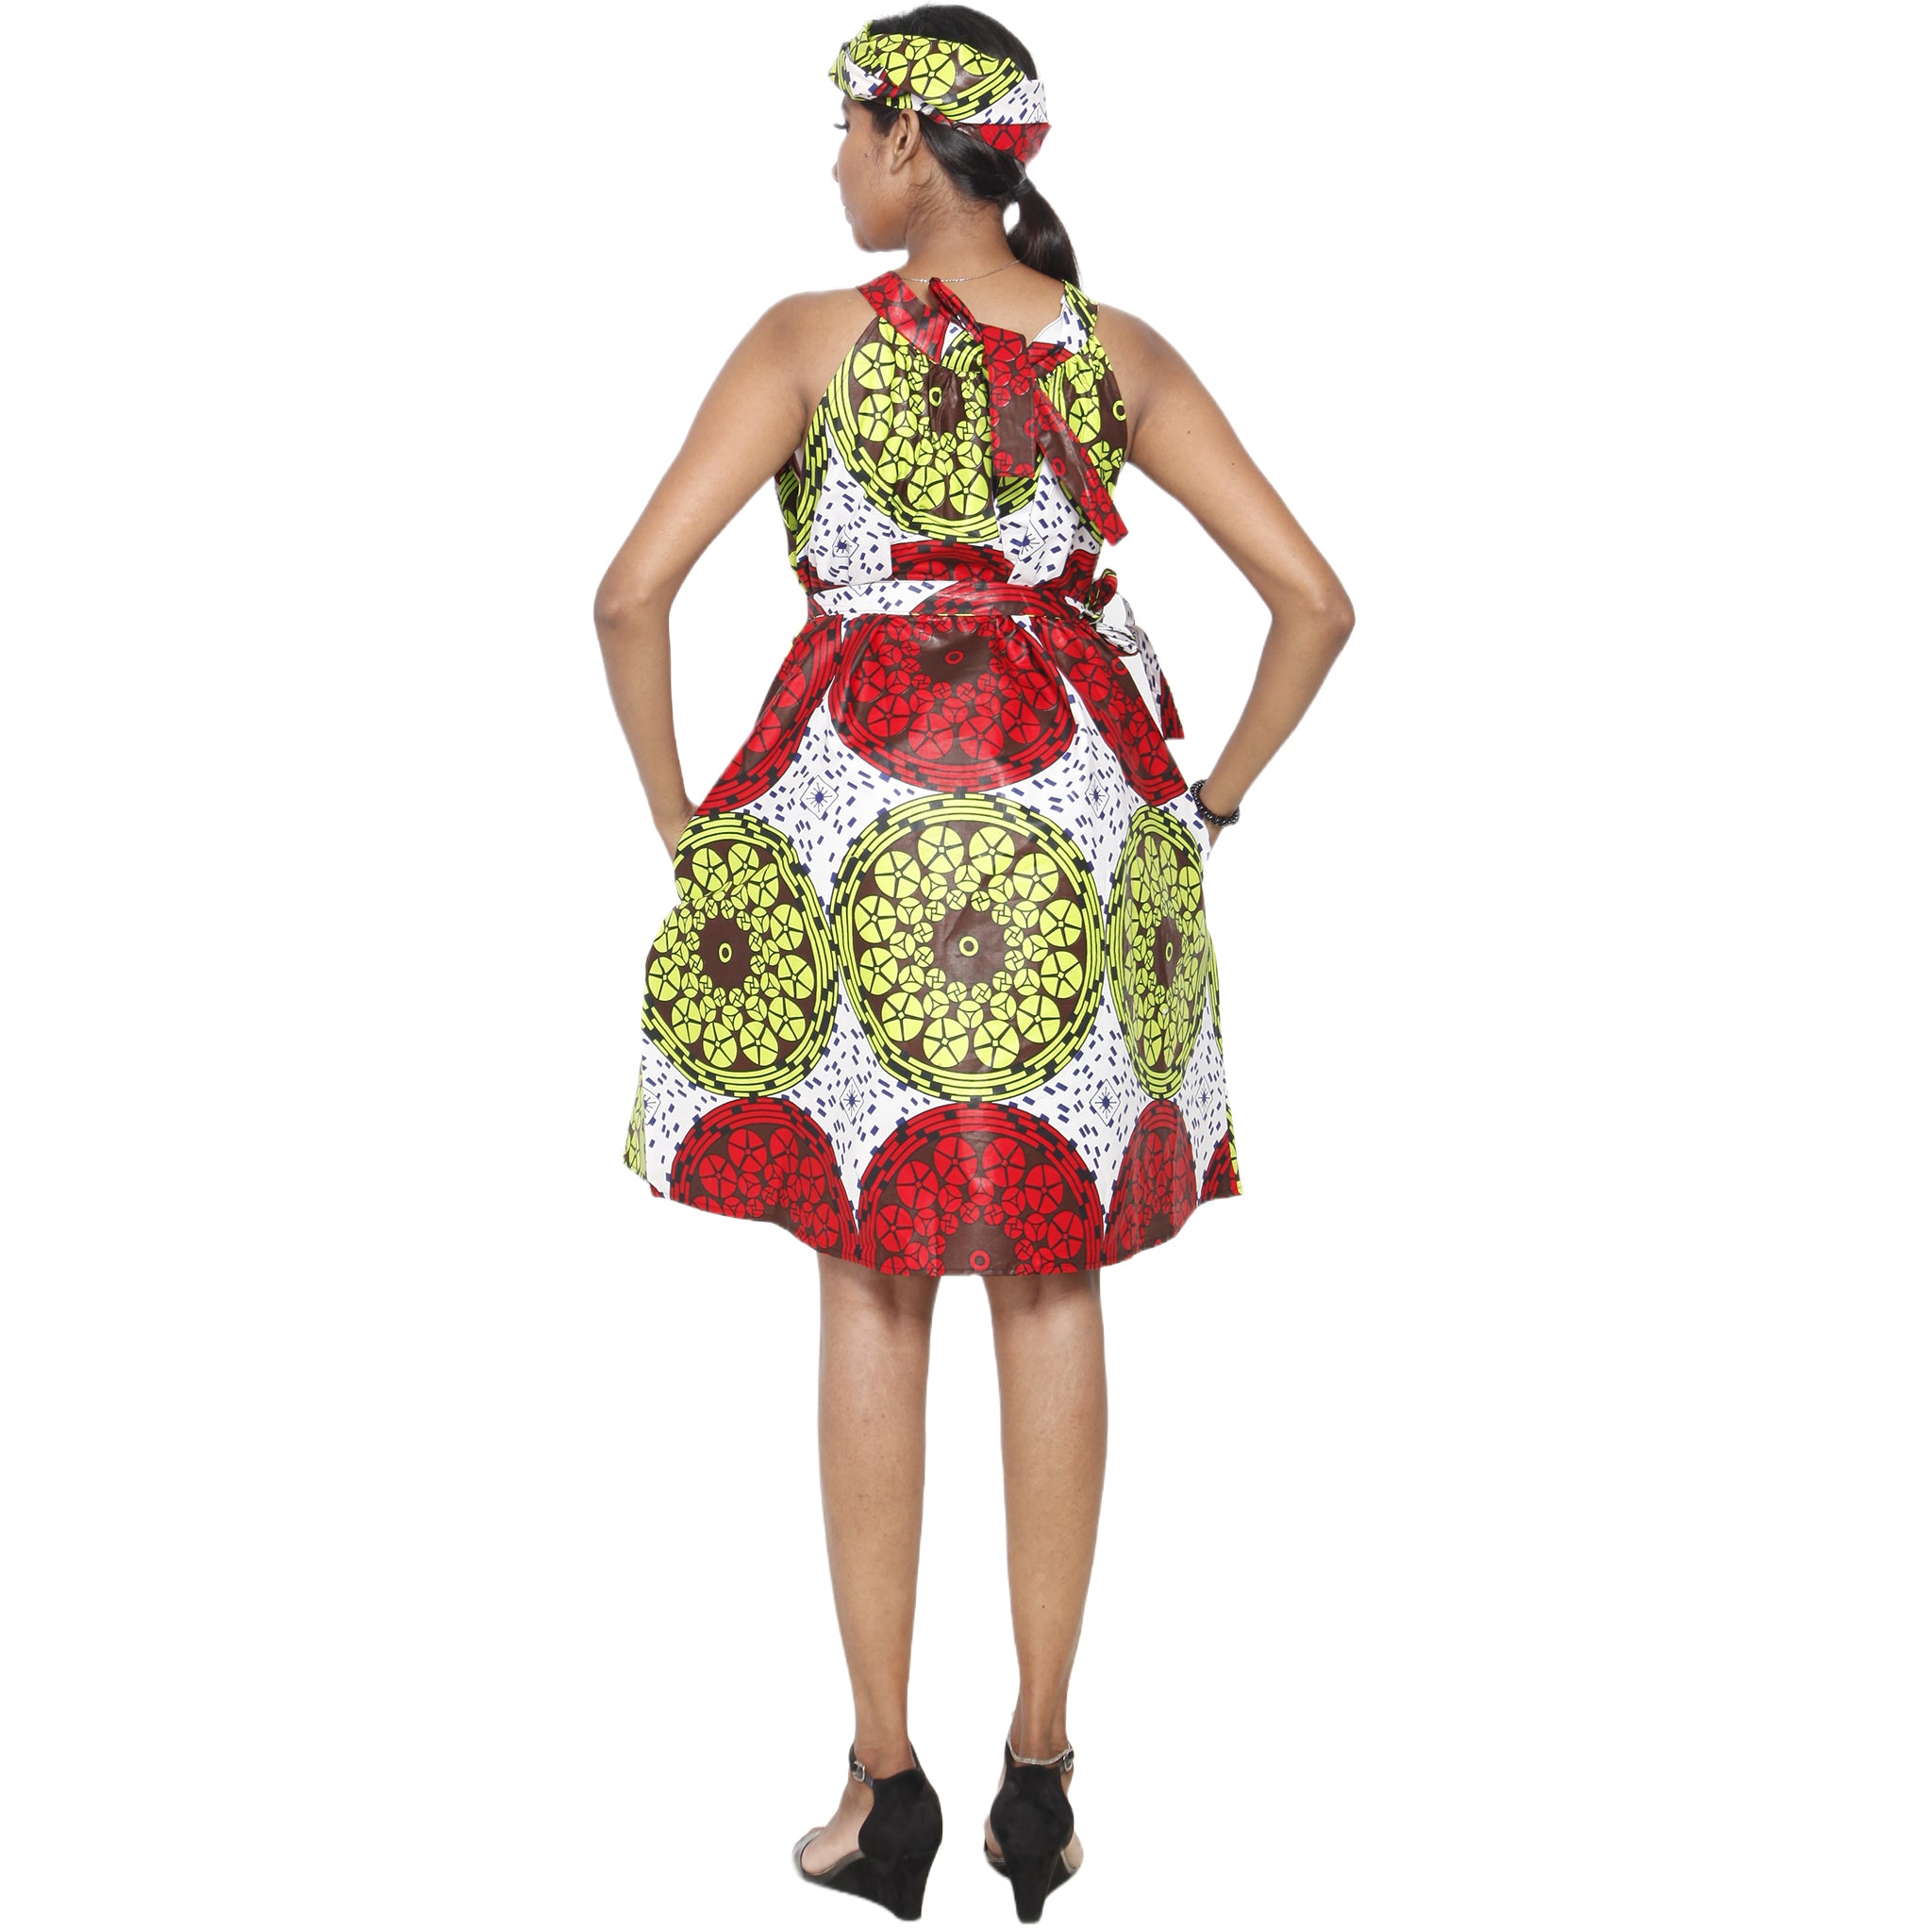 Women's African Print Halter Mini Dress -- FI-P286